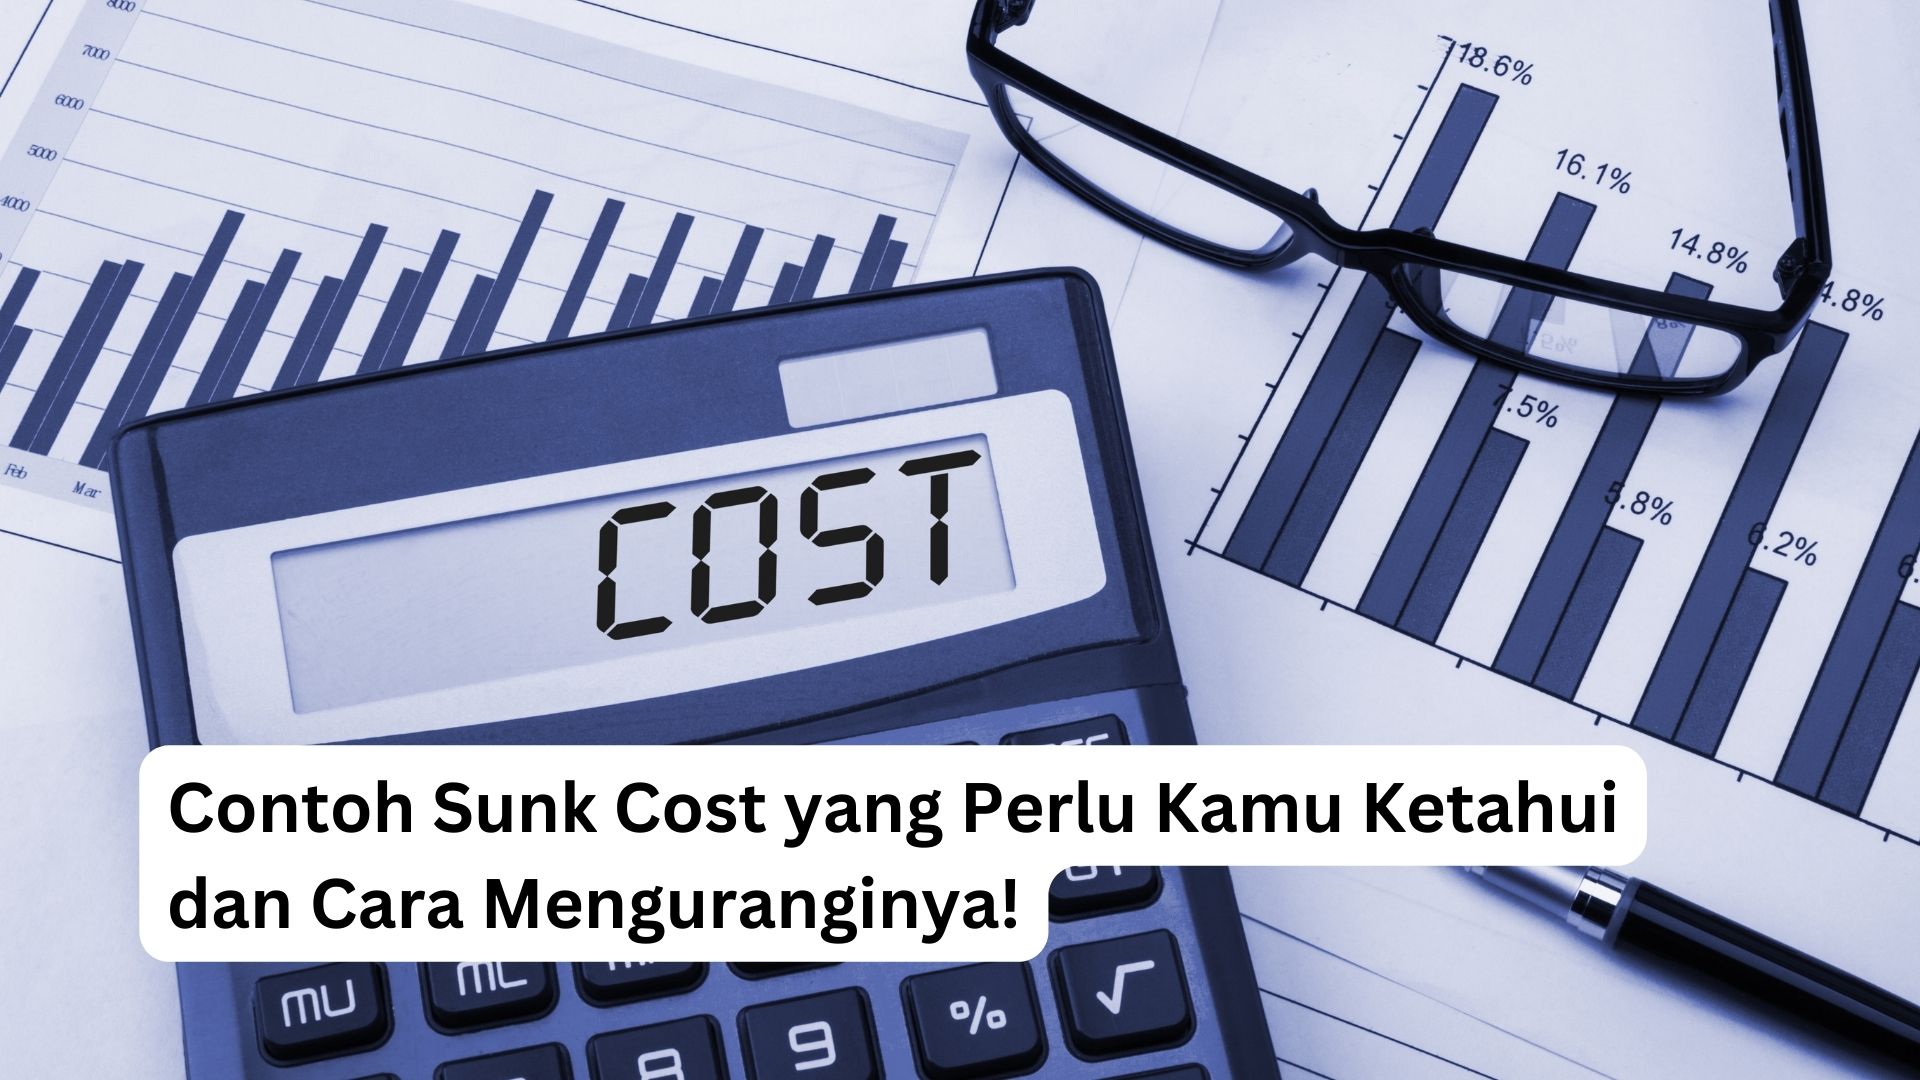 You are currently viewing Contoh Sunk Cost yang Perlu Kamu Ketahui dan Cara Menguranginya!